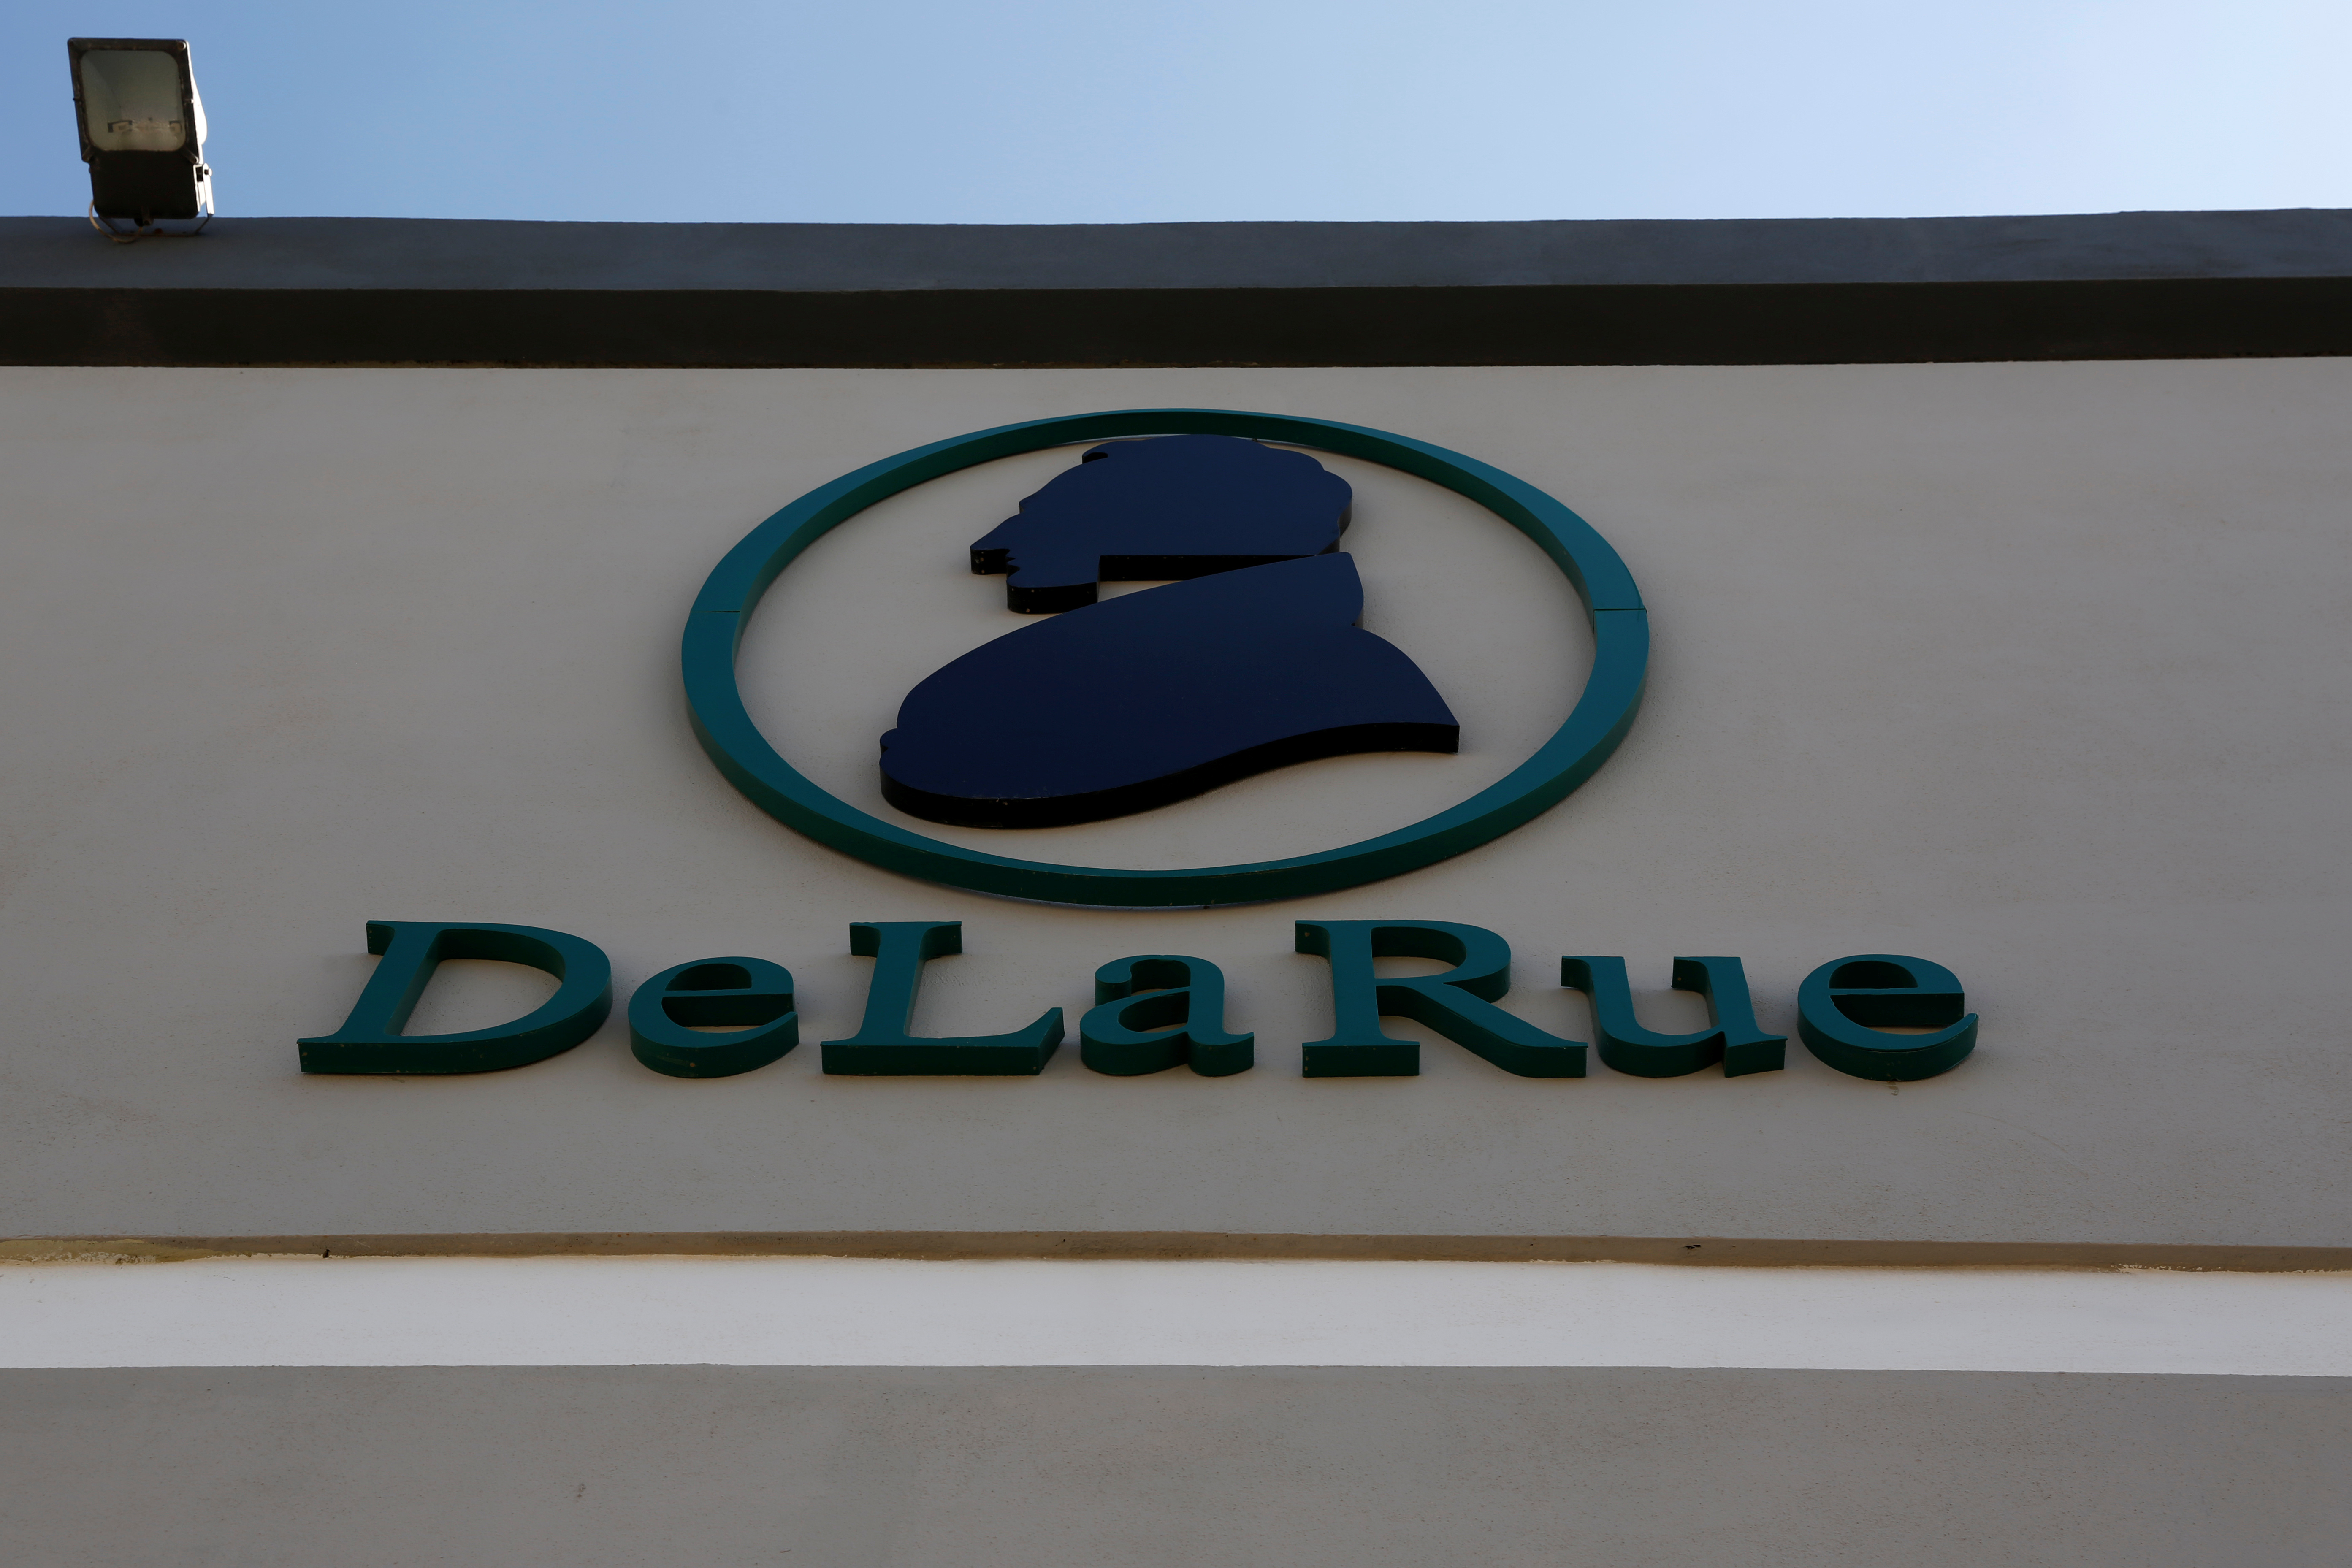 UK's De La Rue raises half-year operating profit outlook